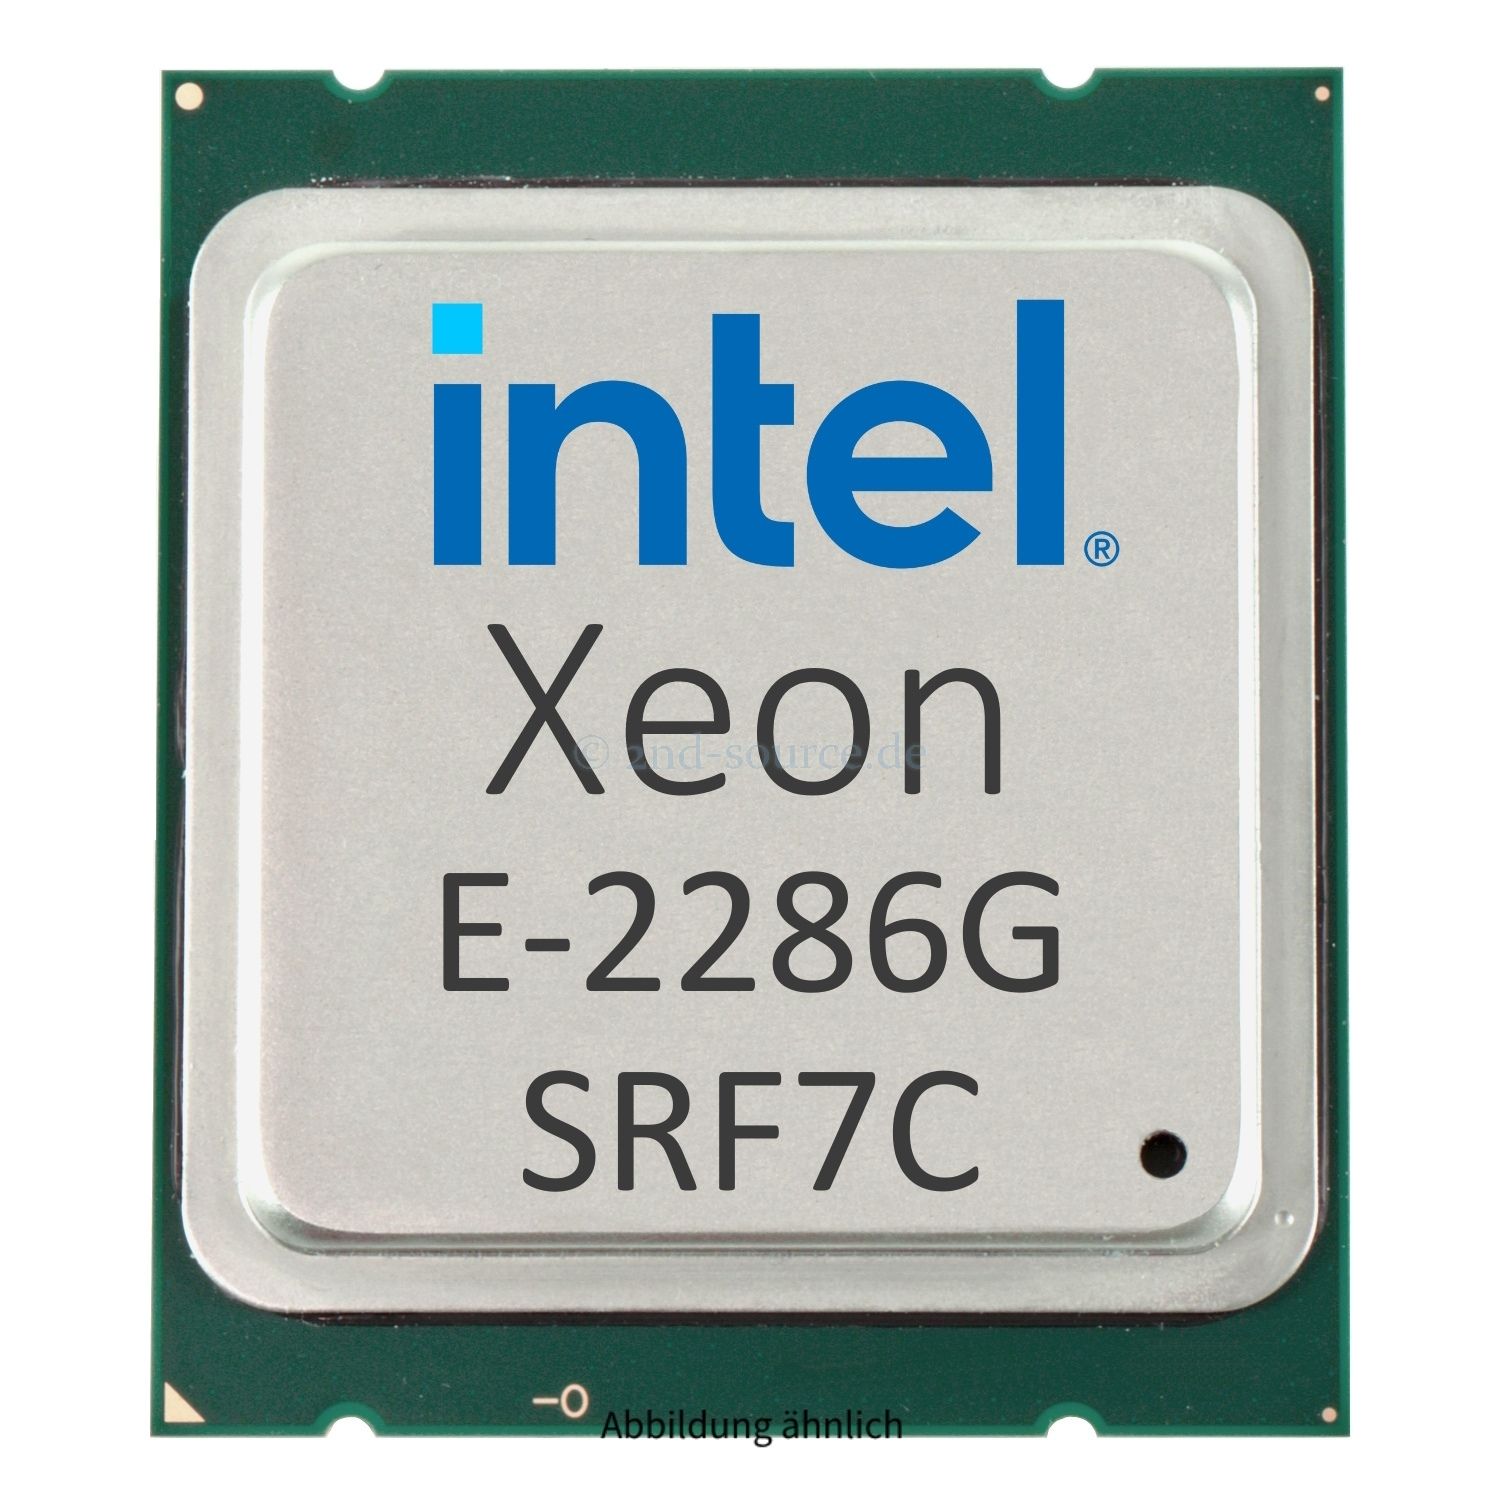 Intel Xeon E-2286G 4.00GHz 12MB 6-Core CPU 95W SRF7C CM8068404173706